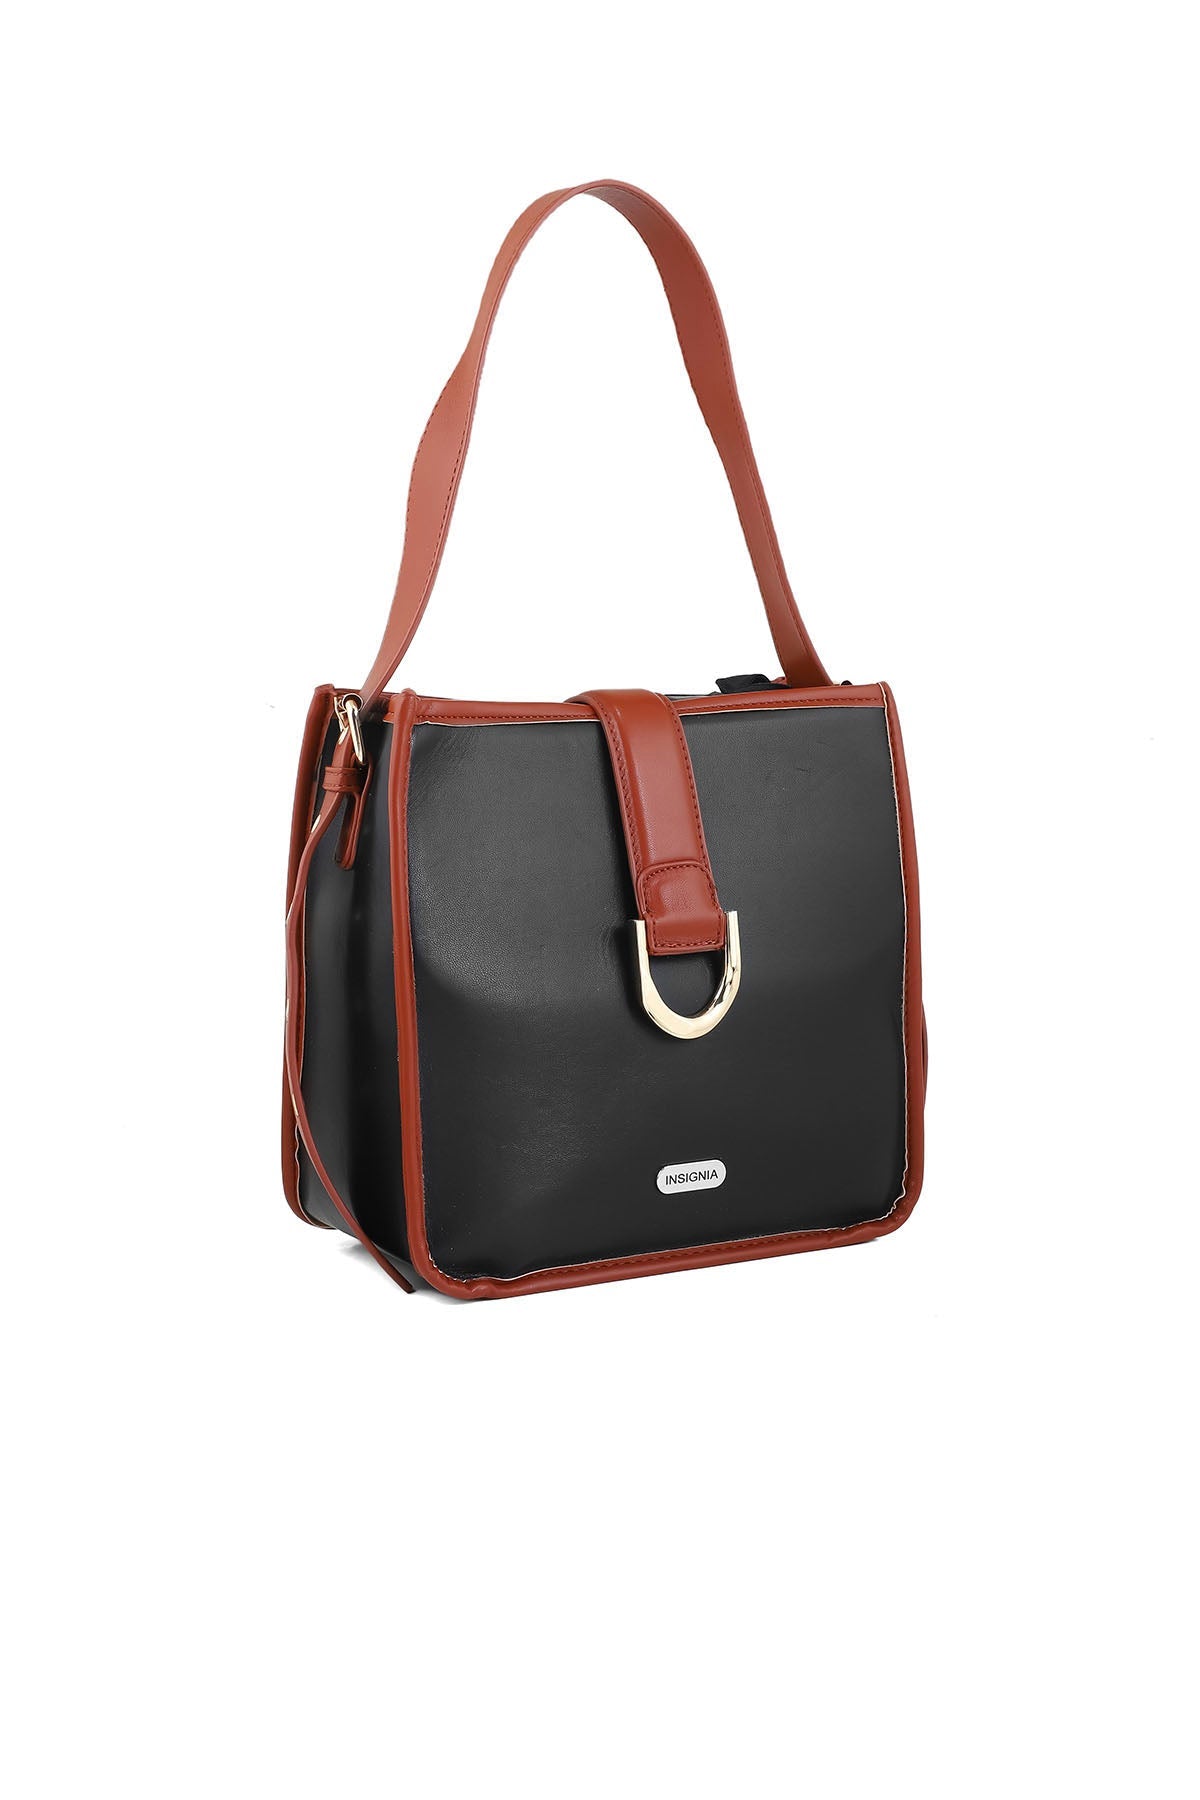 Baguette Shoulder Bags B15064-Black